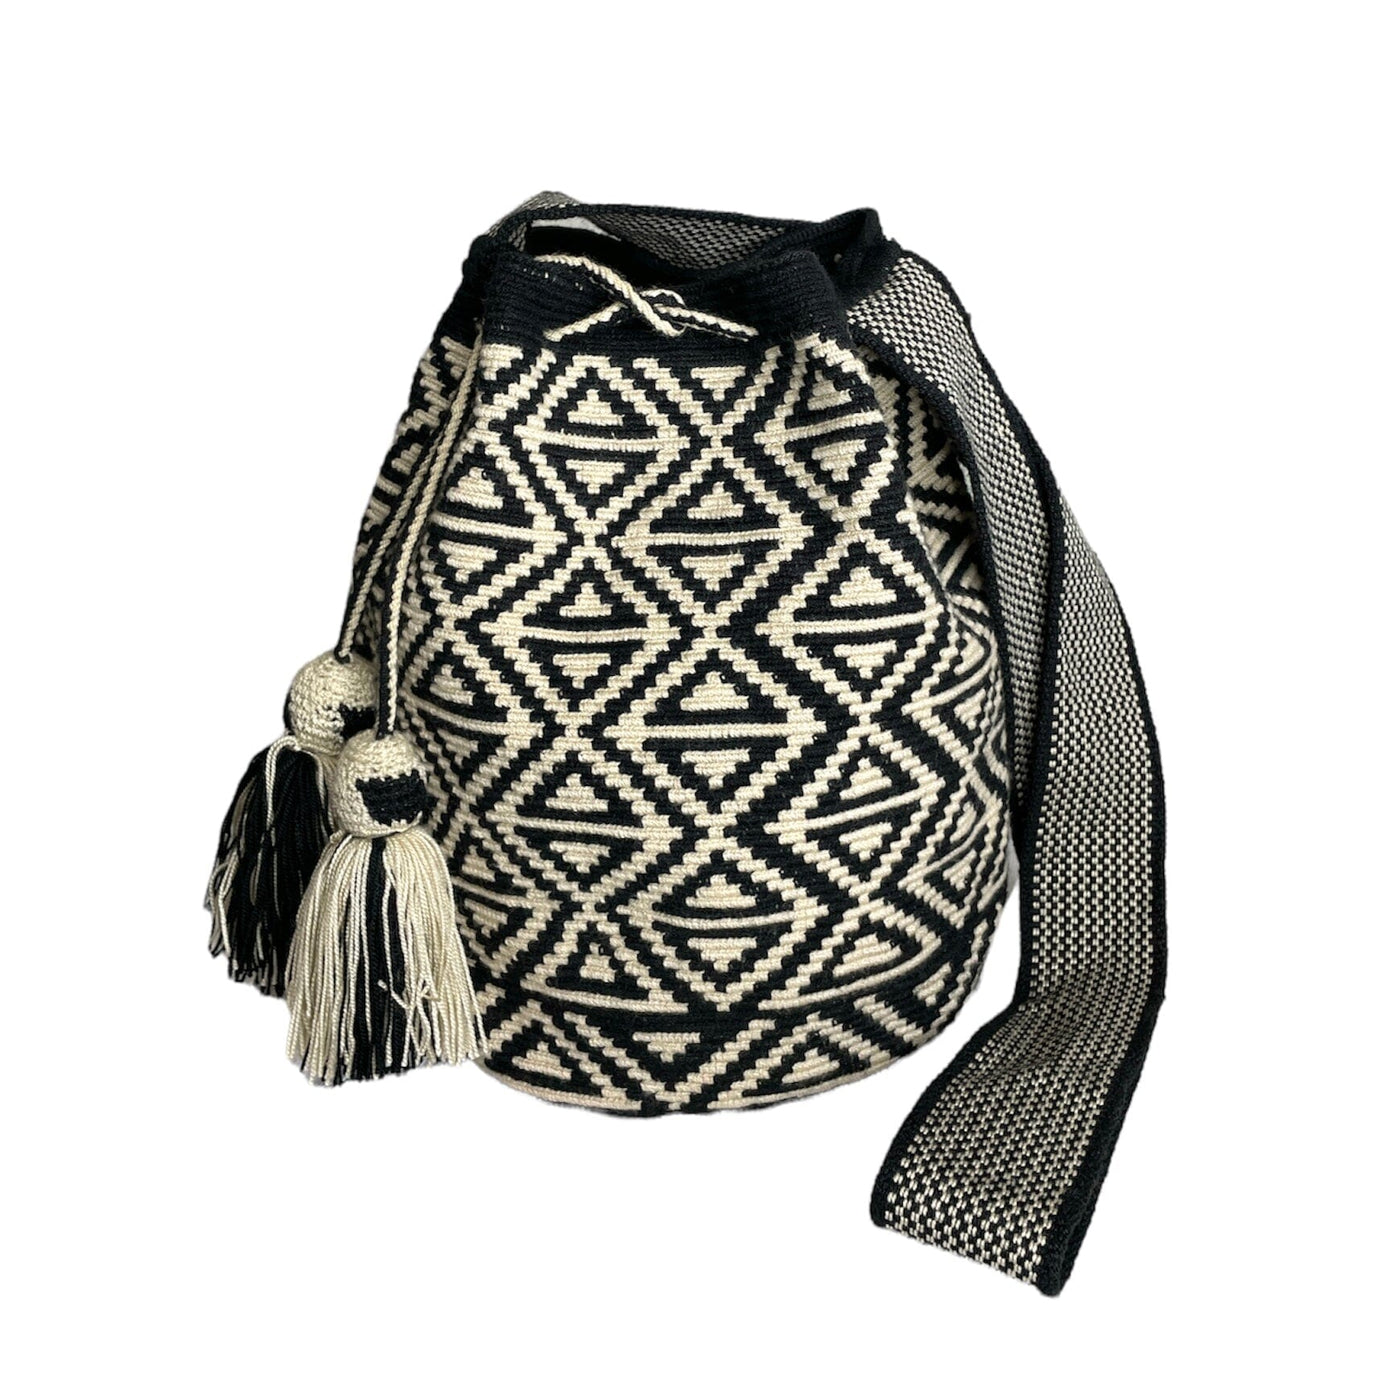 Cute Premium Crochet Bag | Single Thread Hand-Crocheted Bag | Fashion Bag